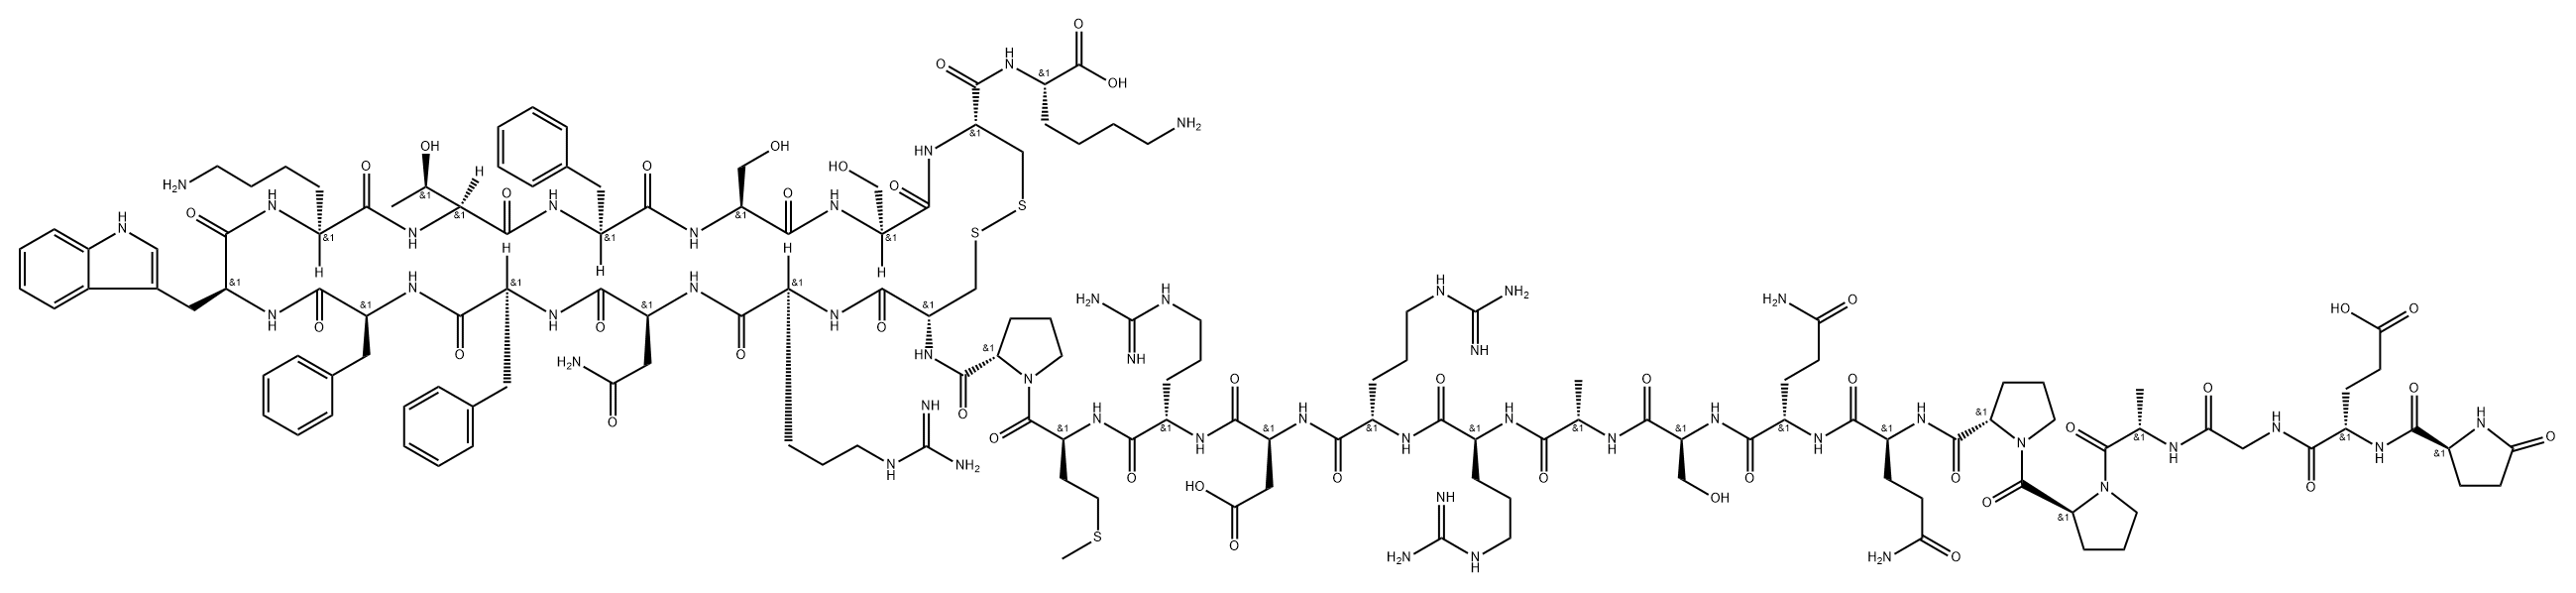 Cortistatin-29 (human) Structure